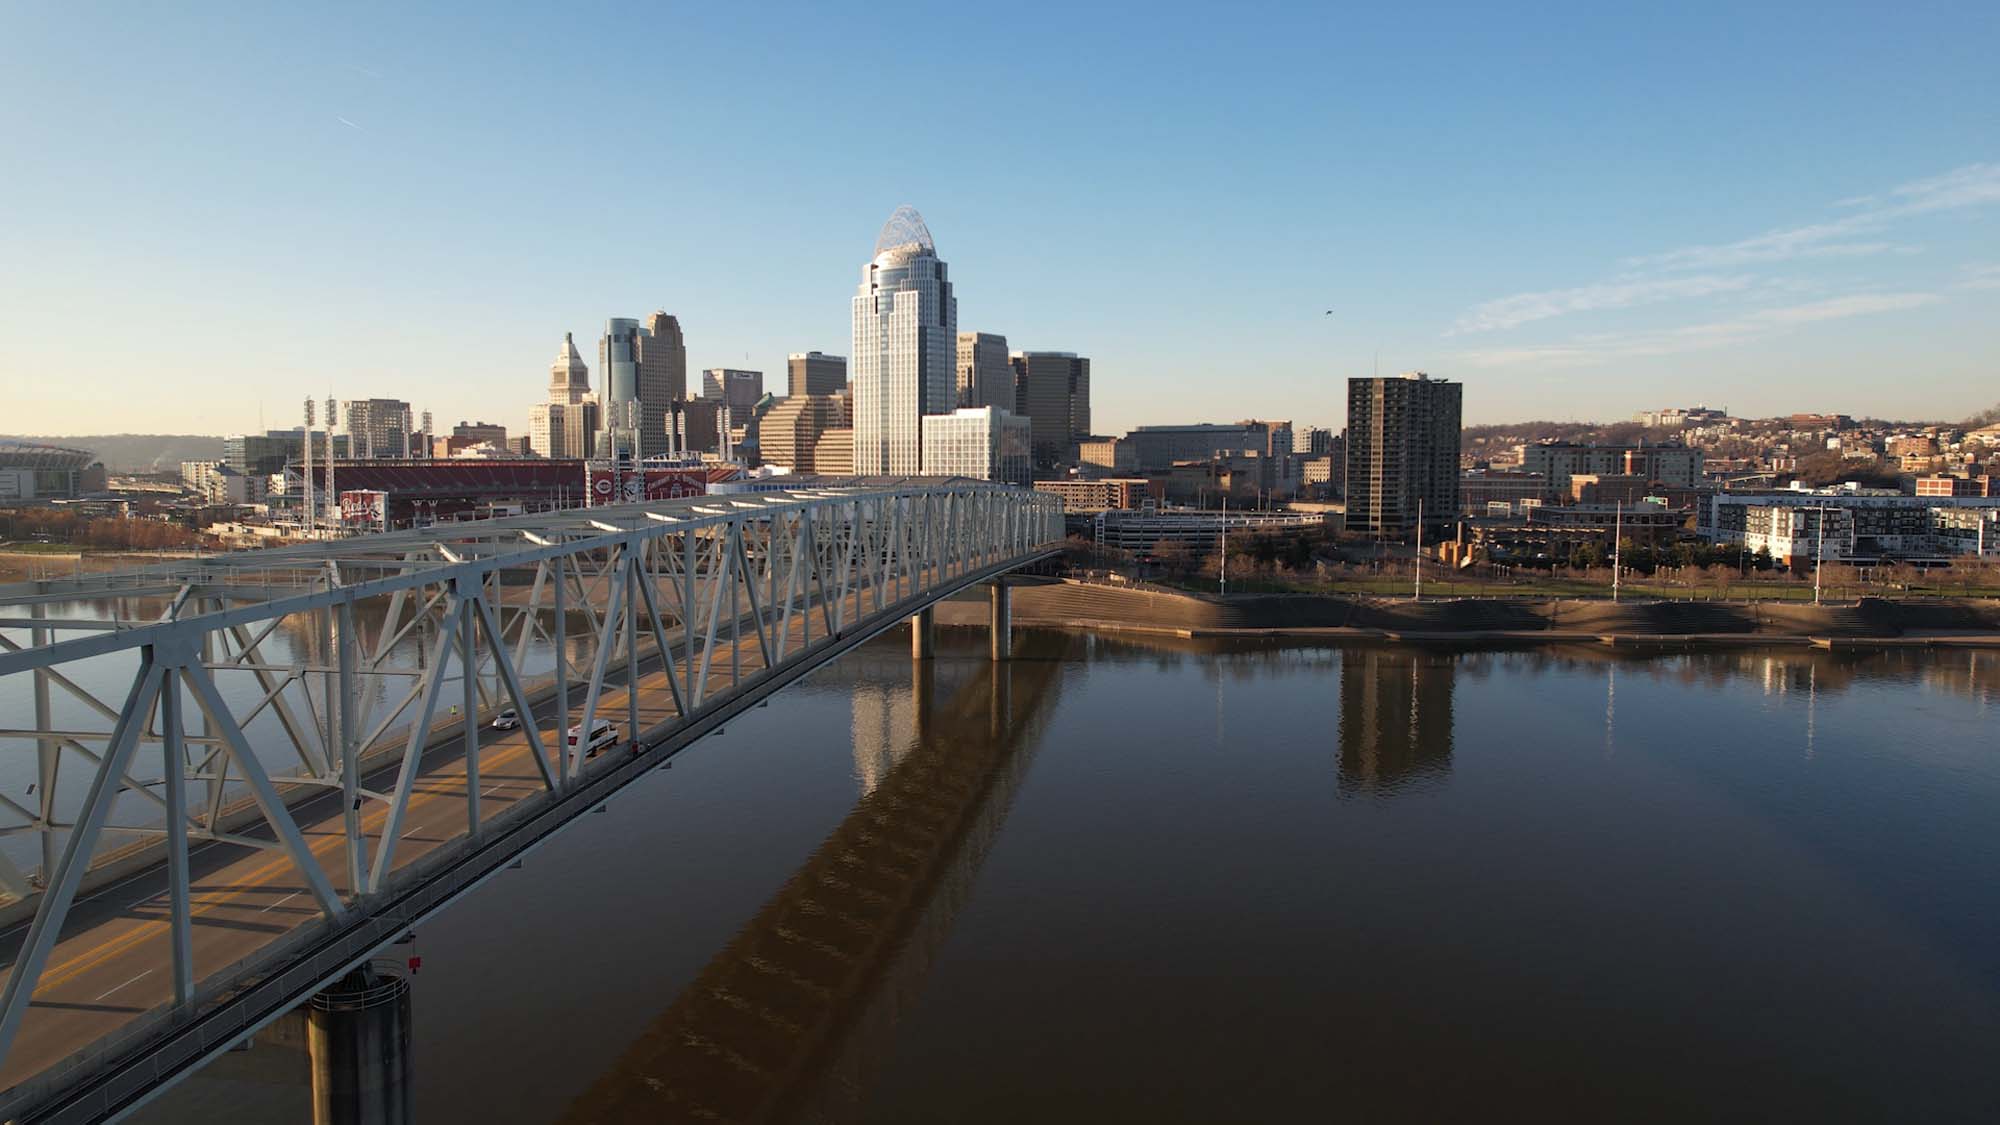 Drone footage of an ERV going across a bridge into downtown Cincinnati.